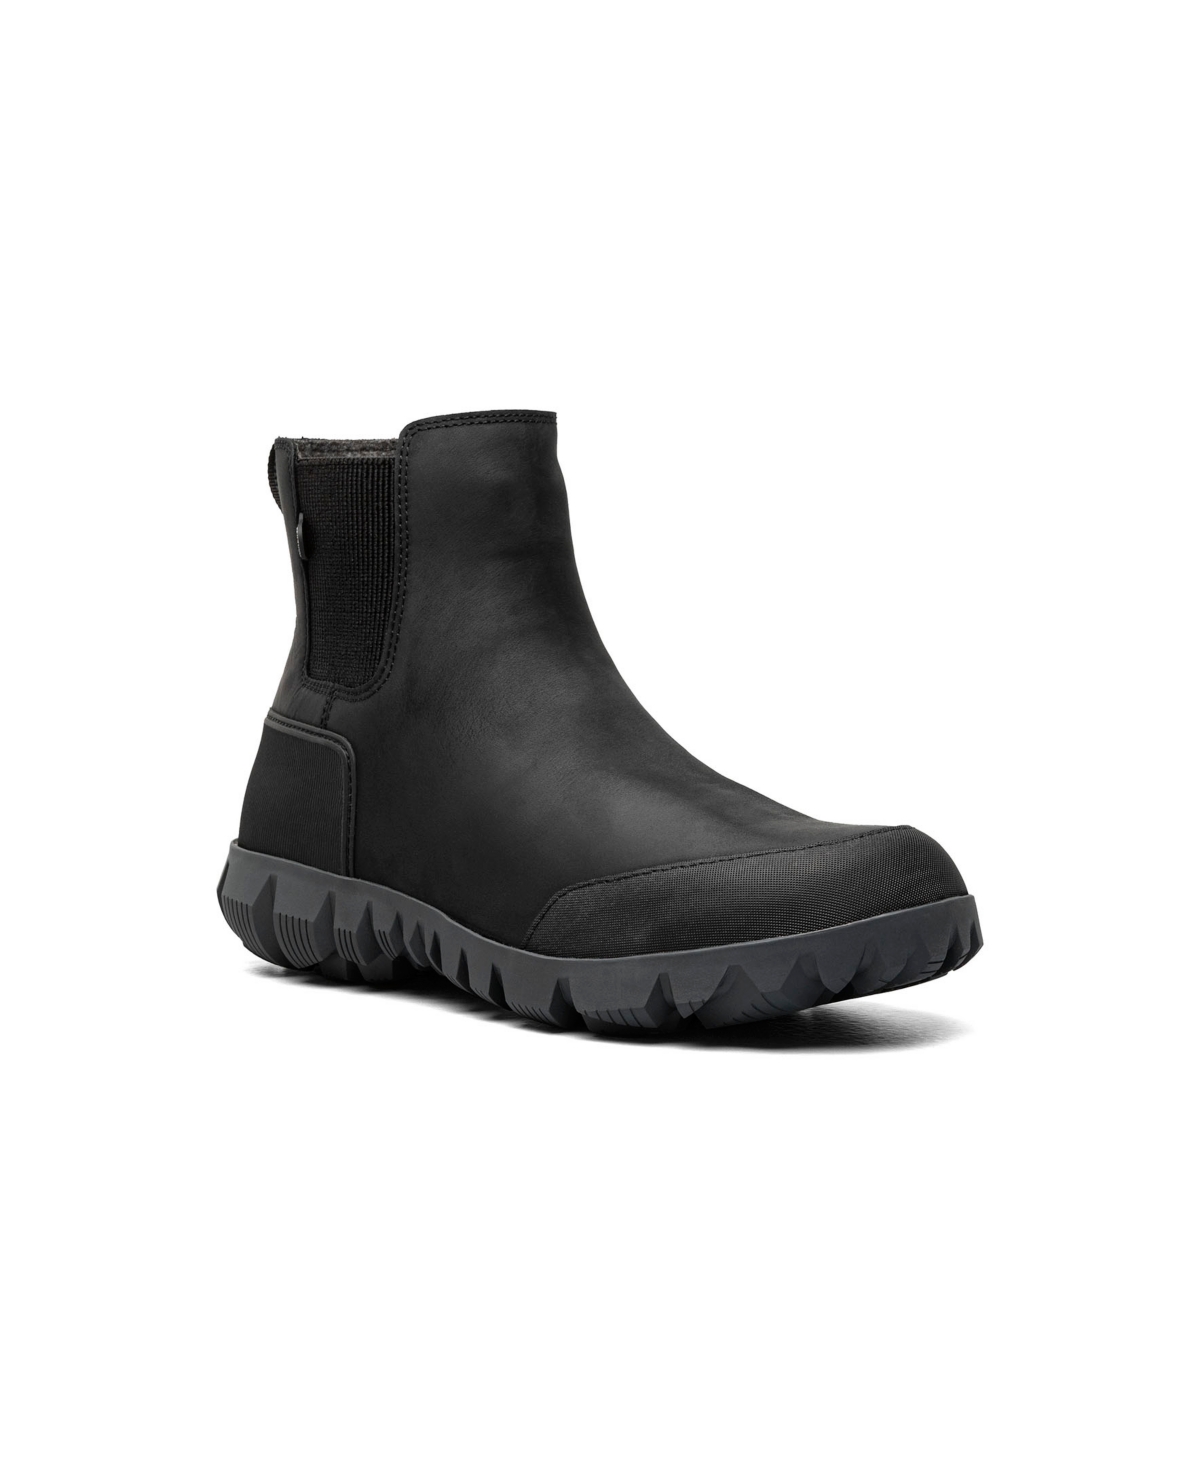 Men's Arcata Urban Leather Slip-Resistant Chelsea Boots - Black